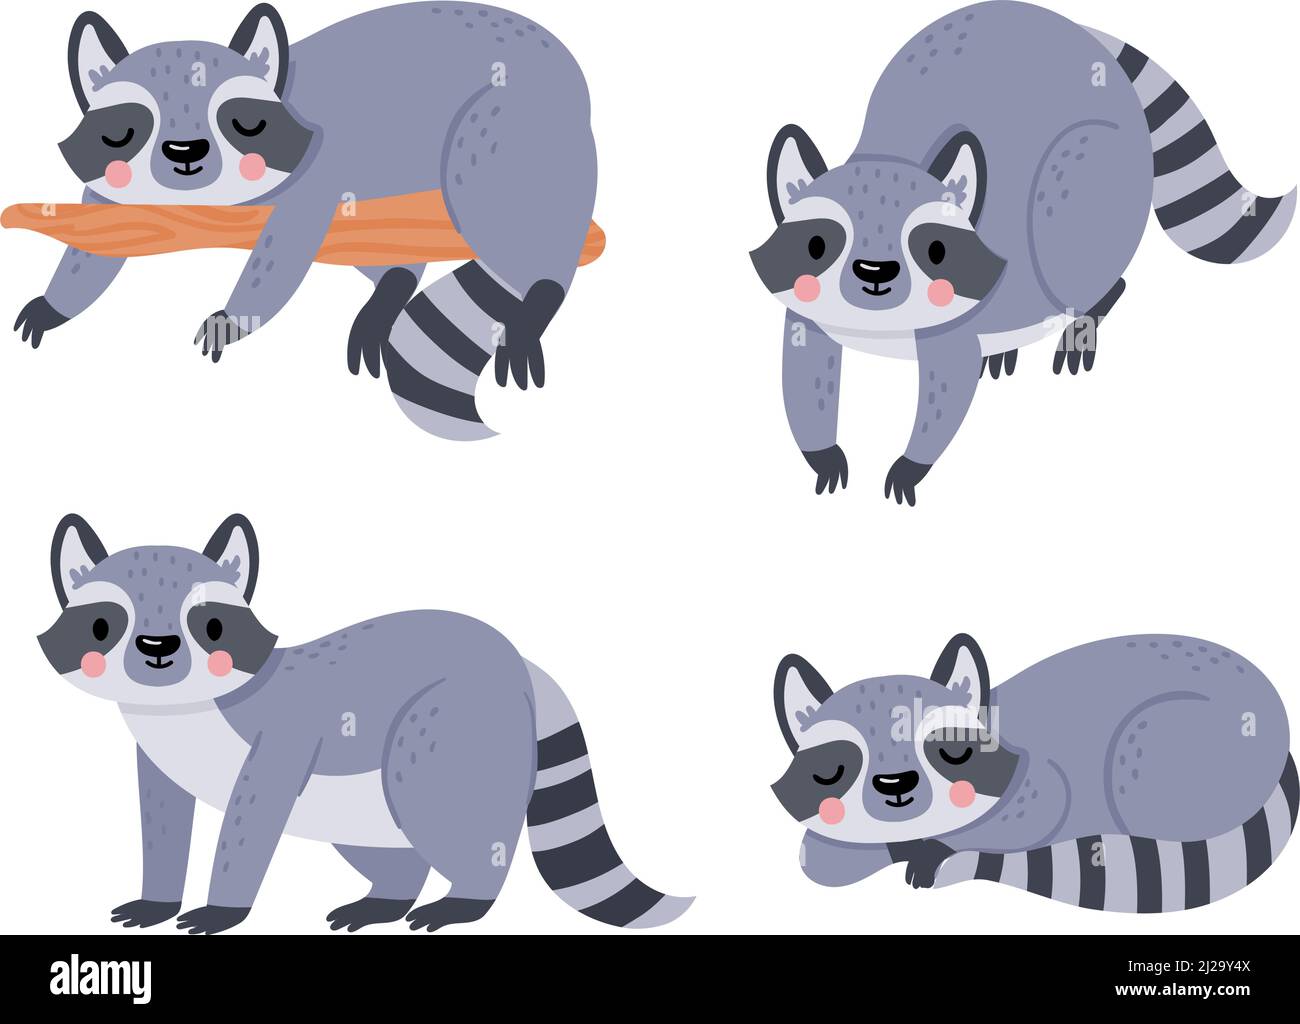 Cute cartoon baby raccoon, animal sleep and rest Stock Vector